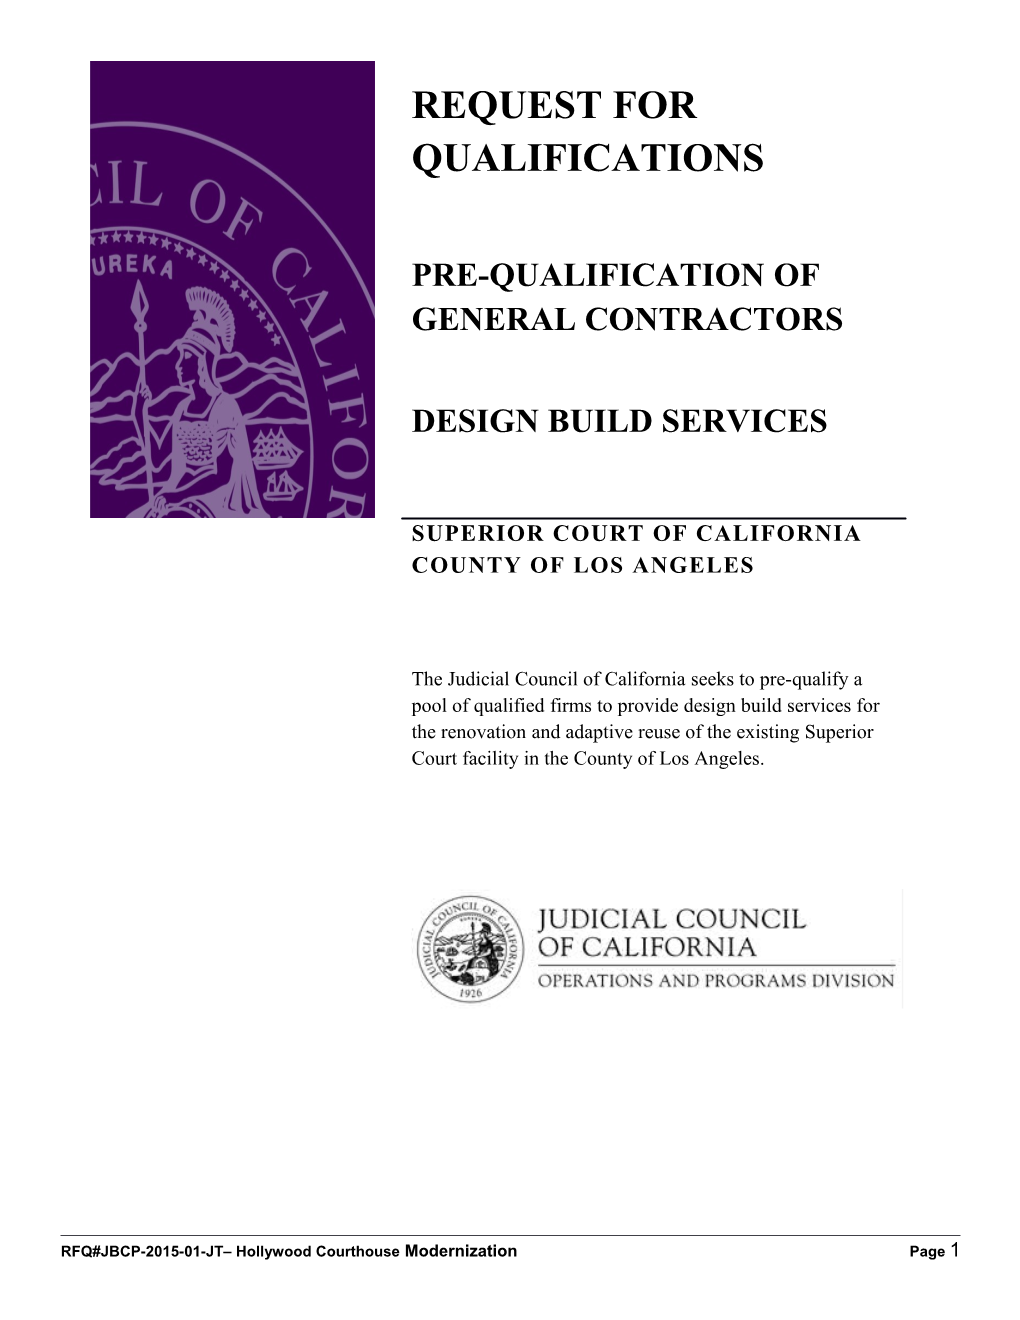 Pre-Qualificationof General Contractors